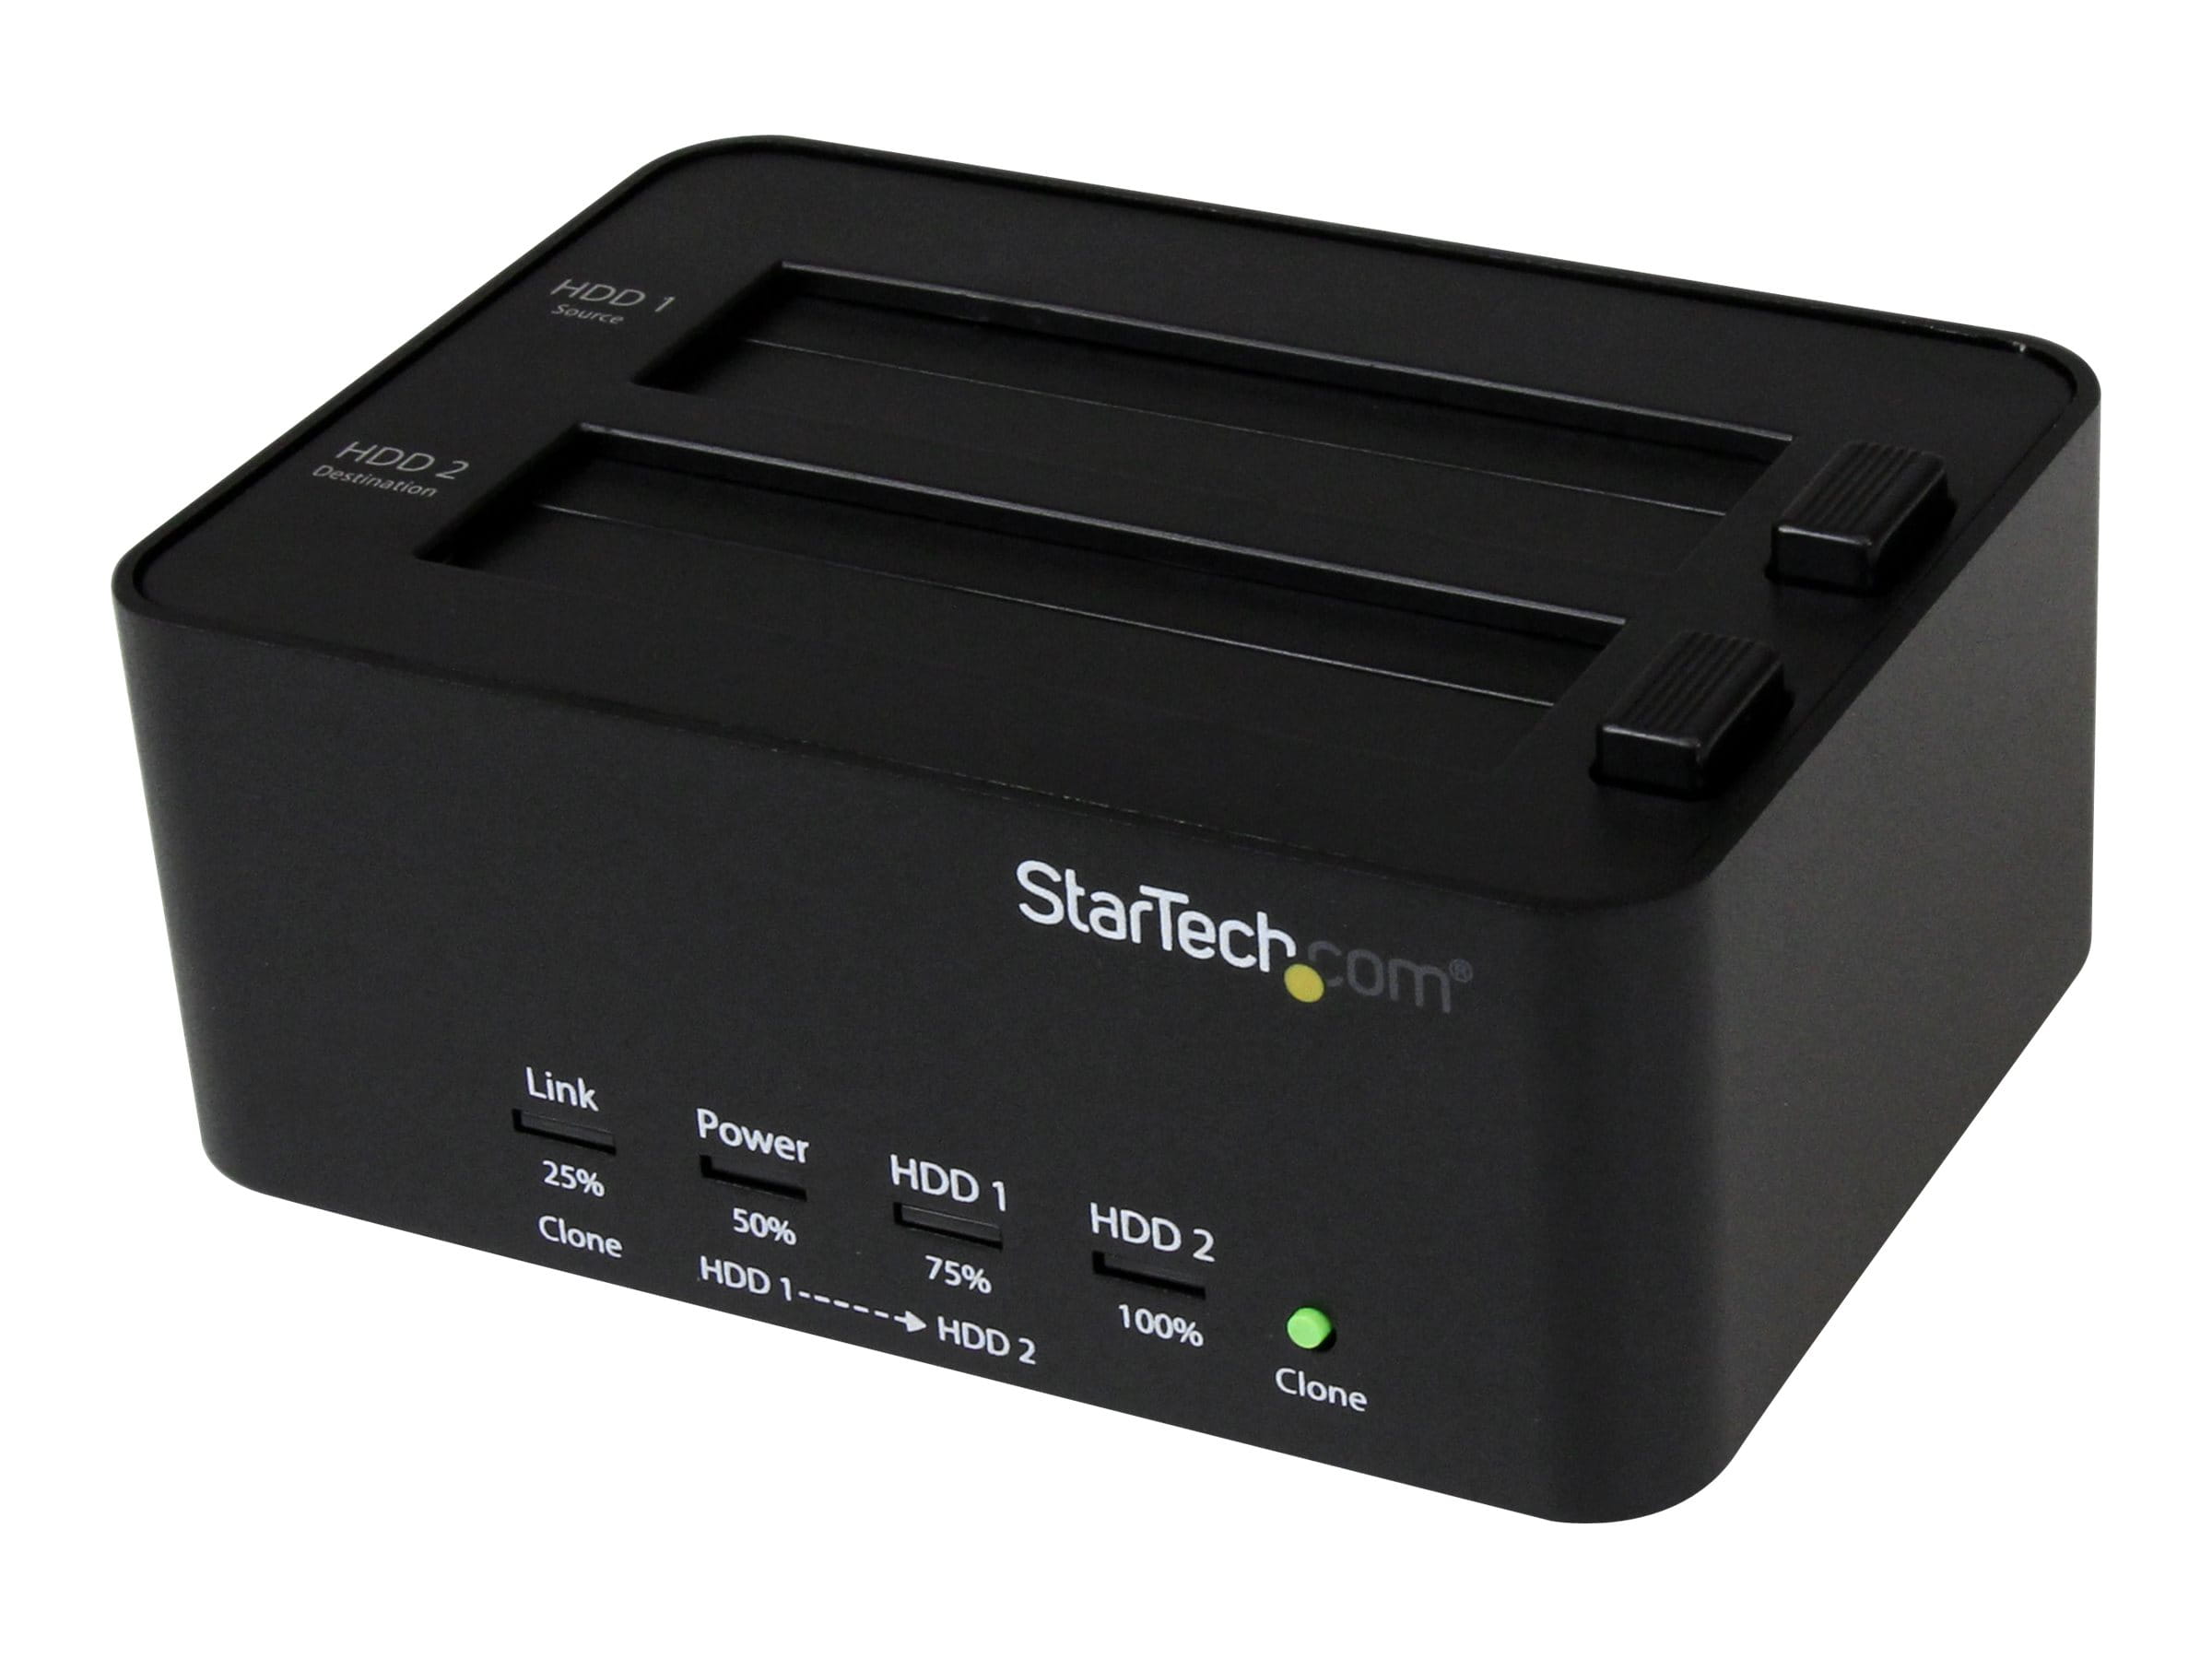 StarTech.com Dual Bay Hard Drive Duplicator and Eraser, Standalone HDDSSD ClonerCopier, USB 3.0 to SATA Docking Station, Hard Disk Duplicator and Sanitizer Dock - ToollessTop-Loading Design - Festplattenduplikator - 2 Schächte (SATA-300)